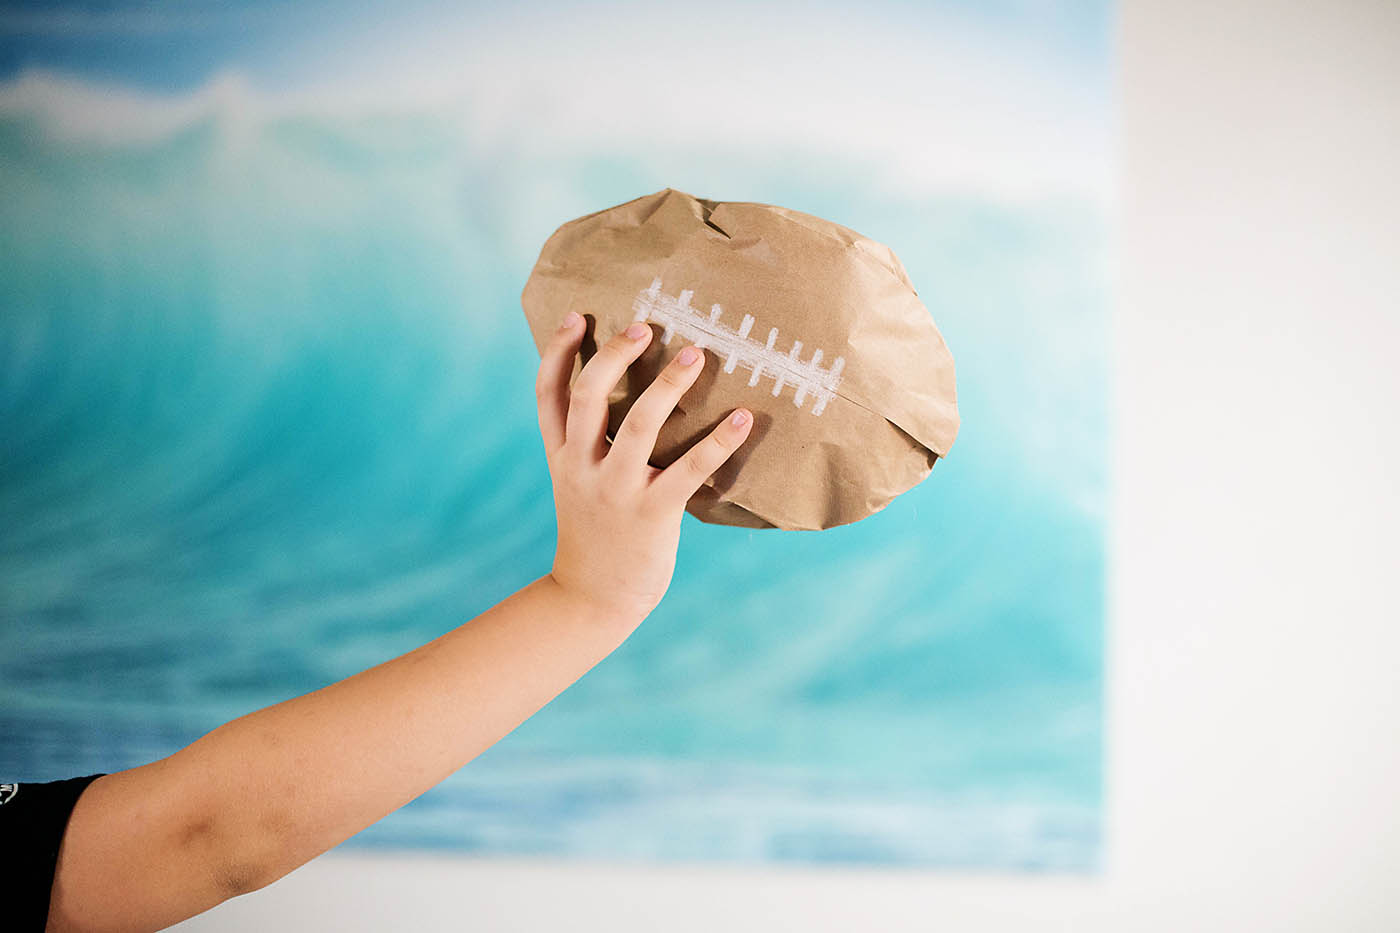 Paper bag football craft for kids 